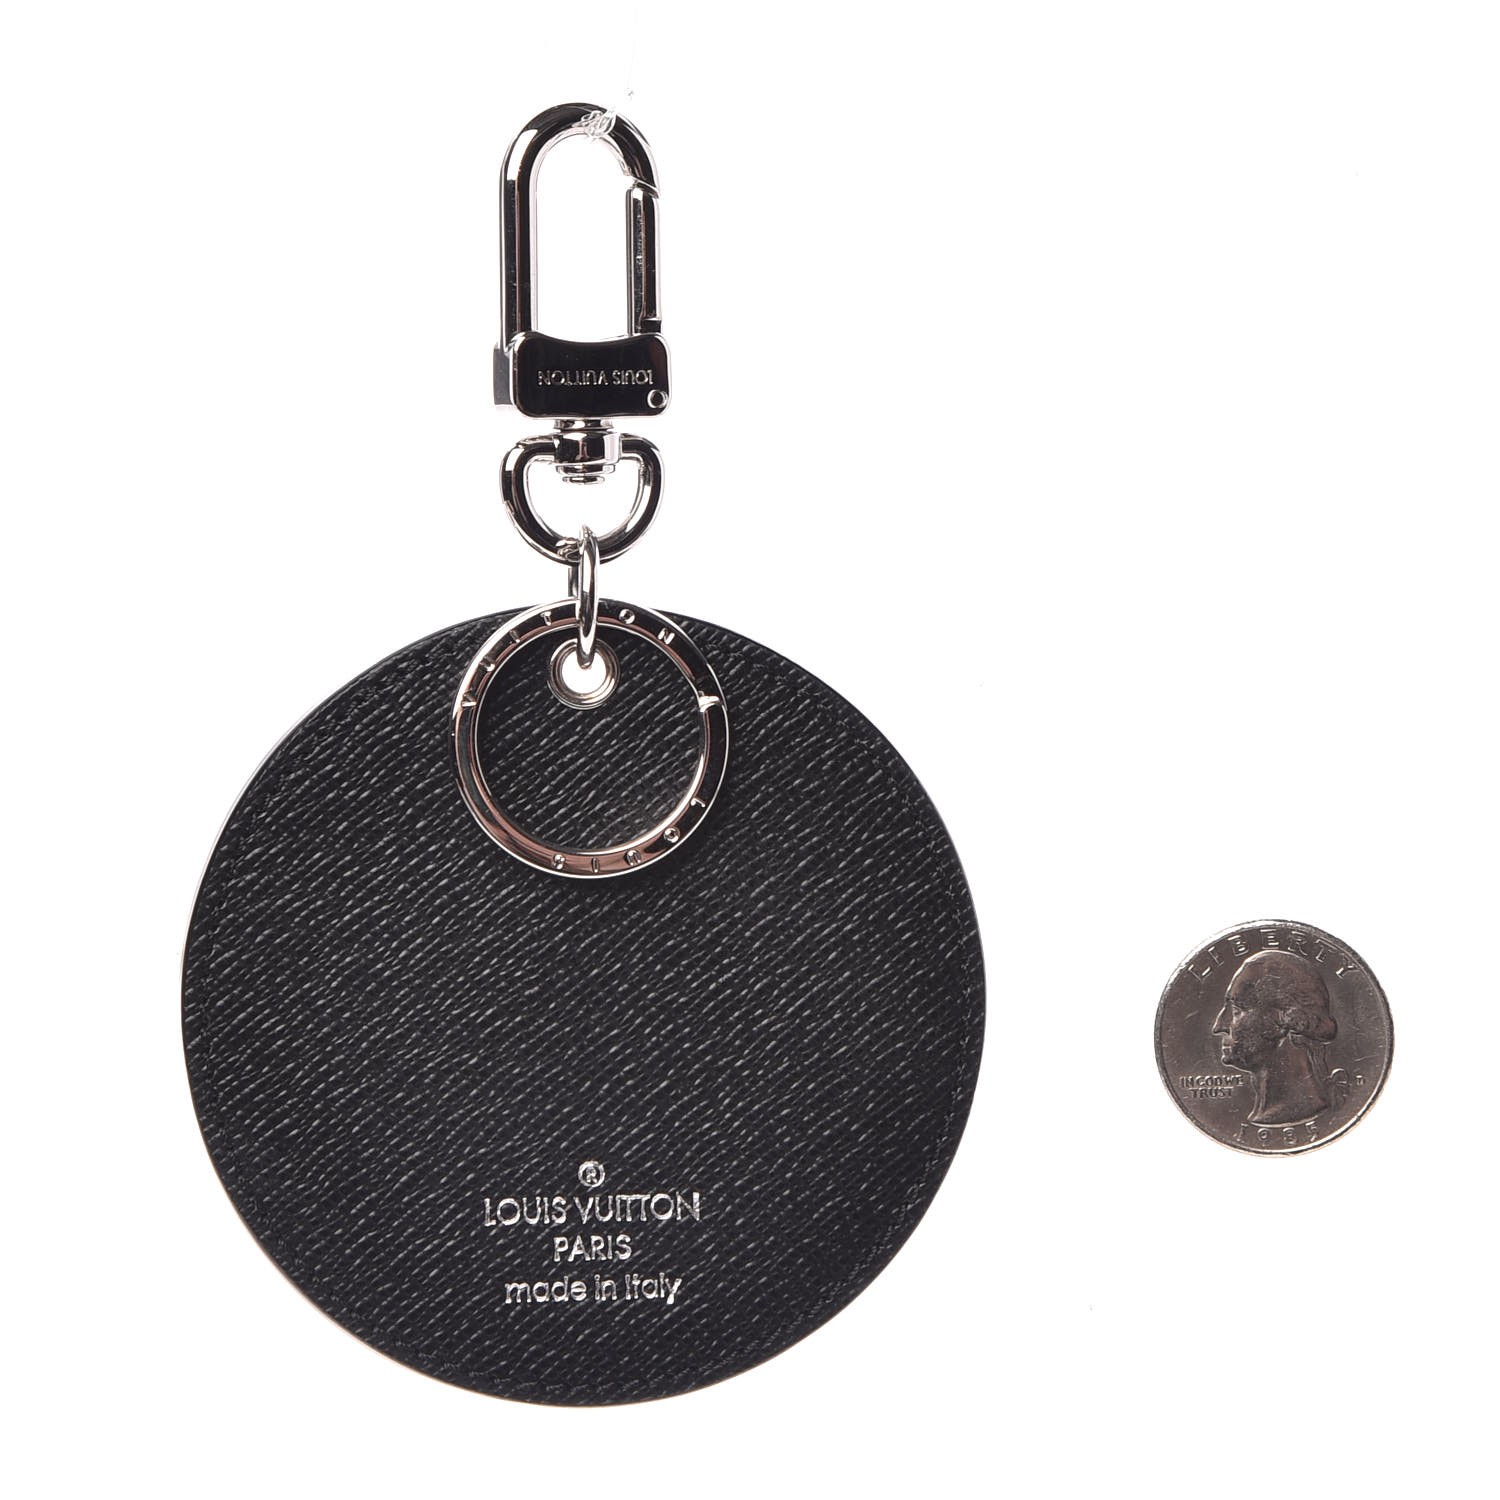 New!! Louis Vuitton NIGO Illustre Key Ring Bag Charm Damier Giant Monogram